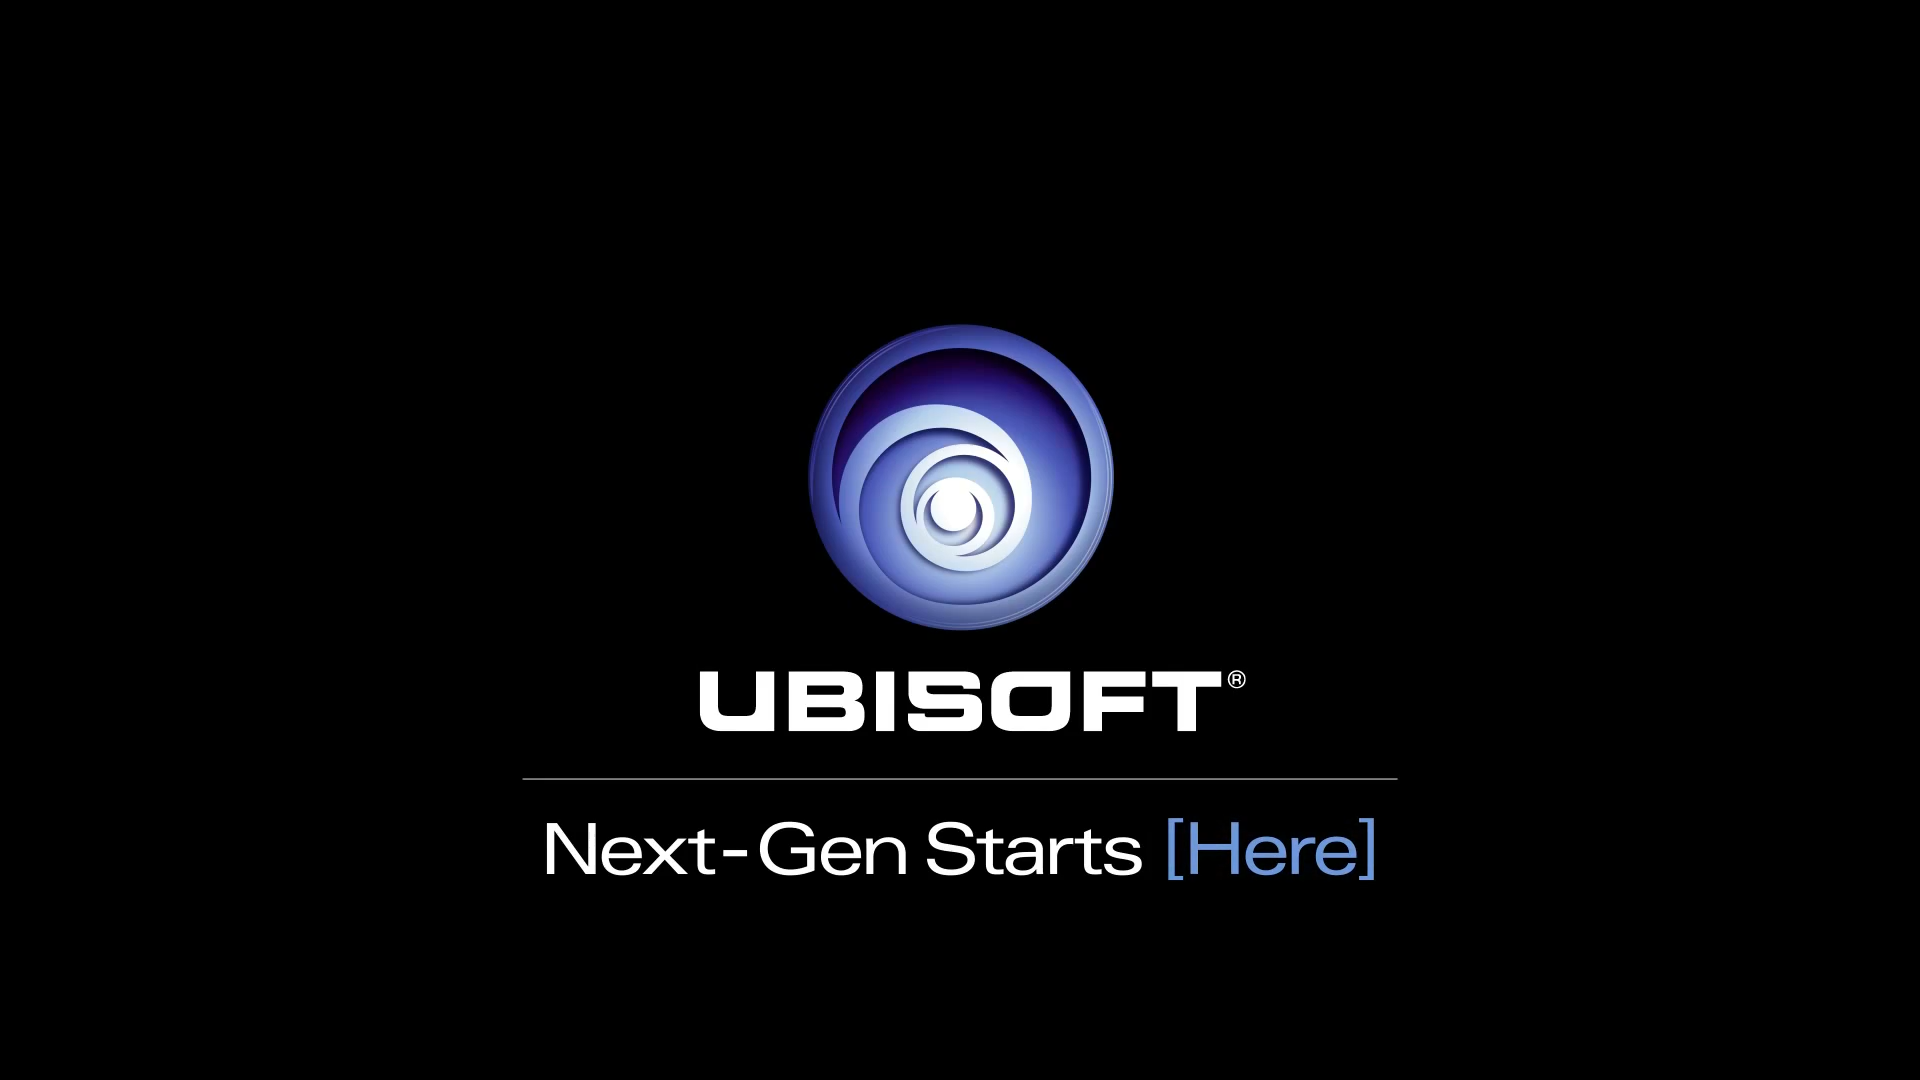 ubisoft_next_gen_starts__here__by_legan666-d7b7cr4.png